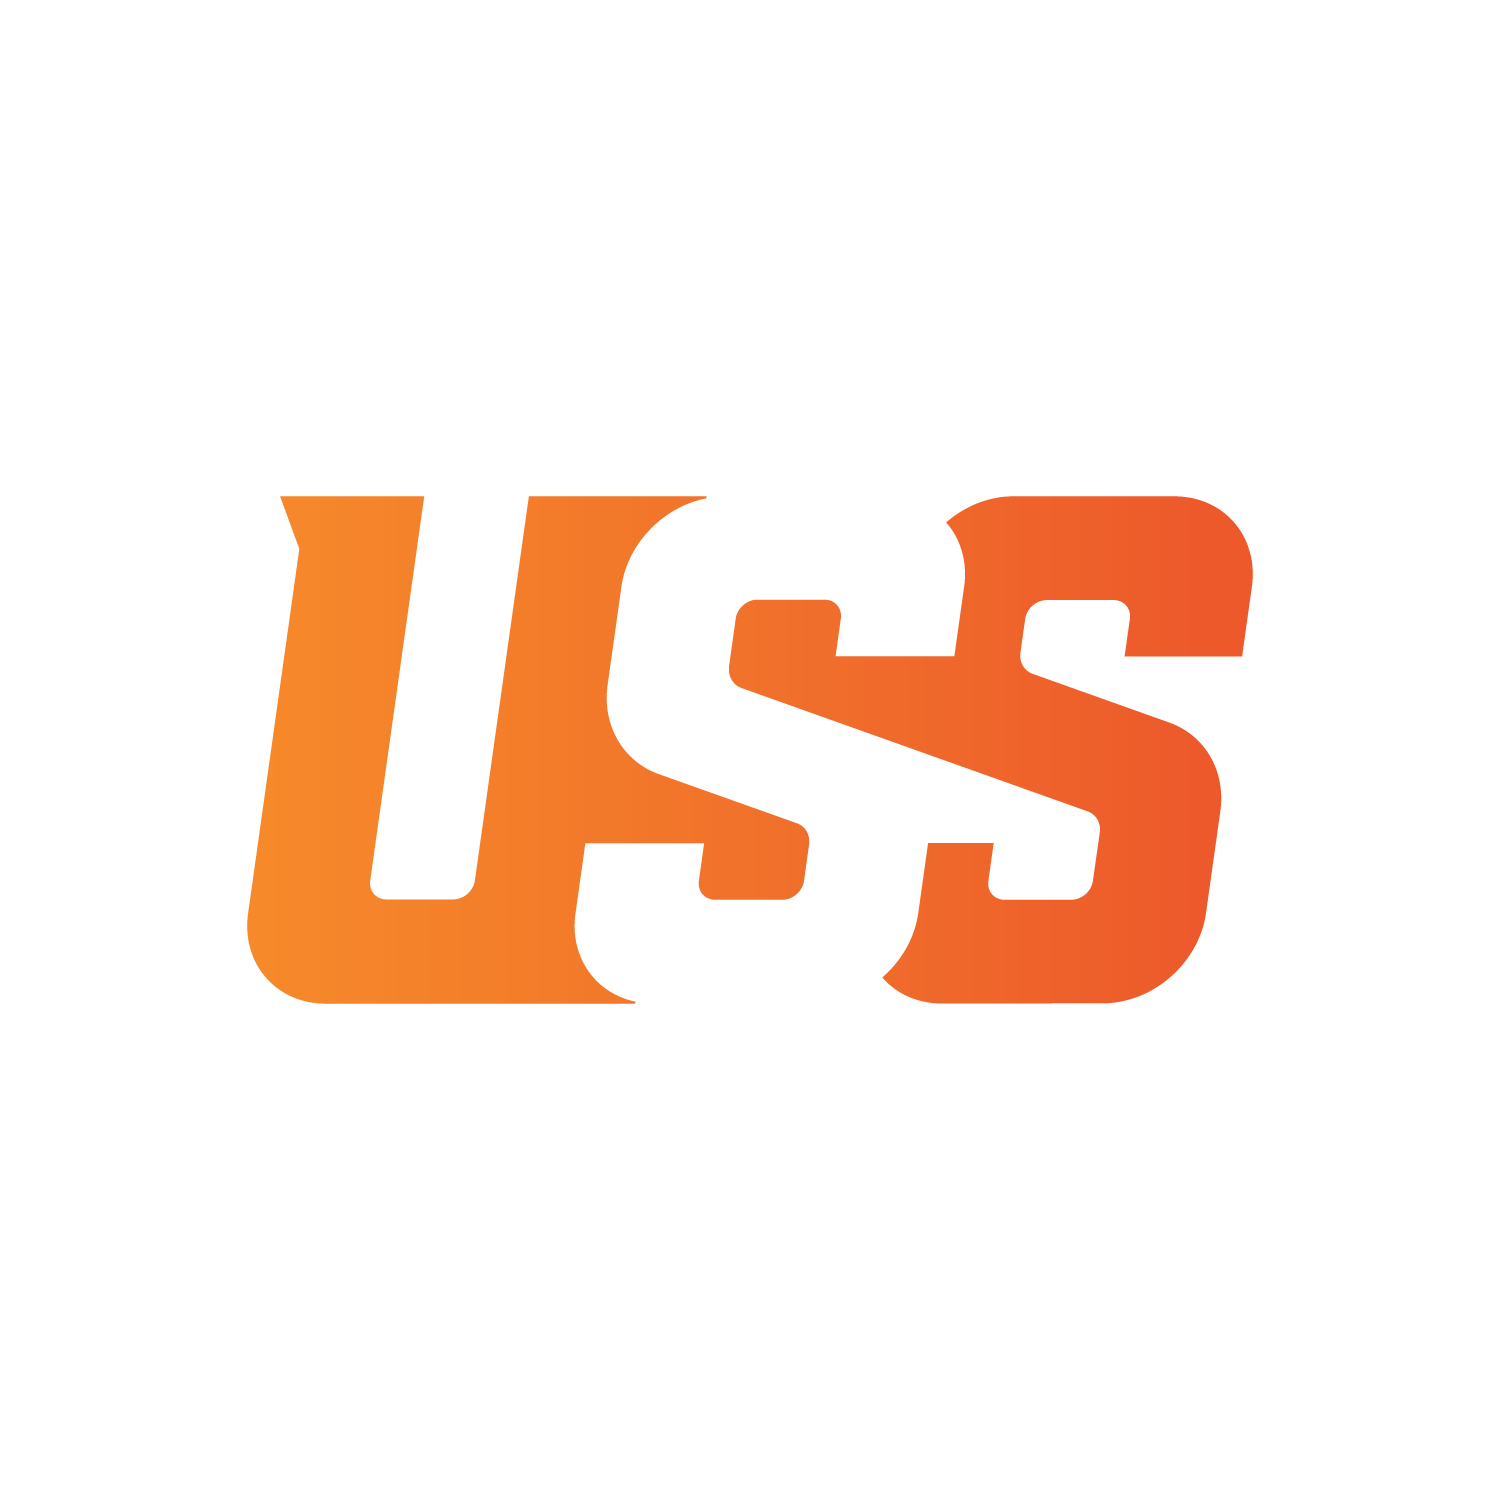 USS logo 